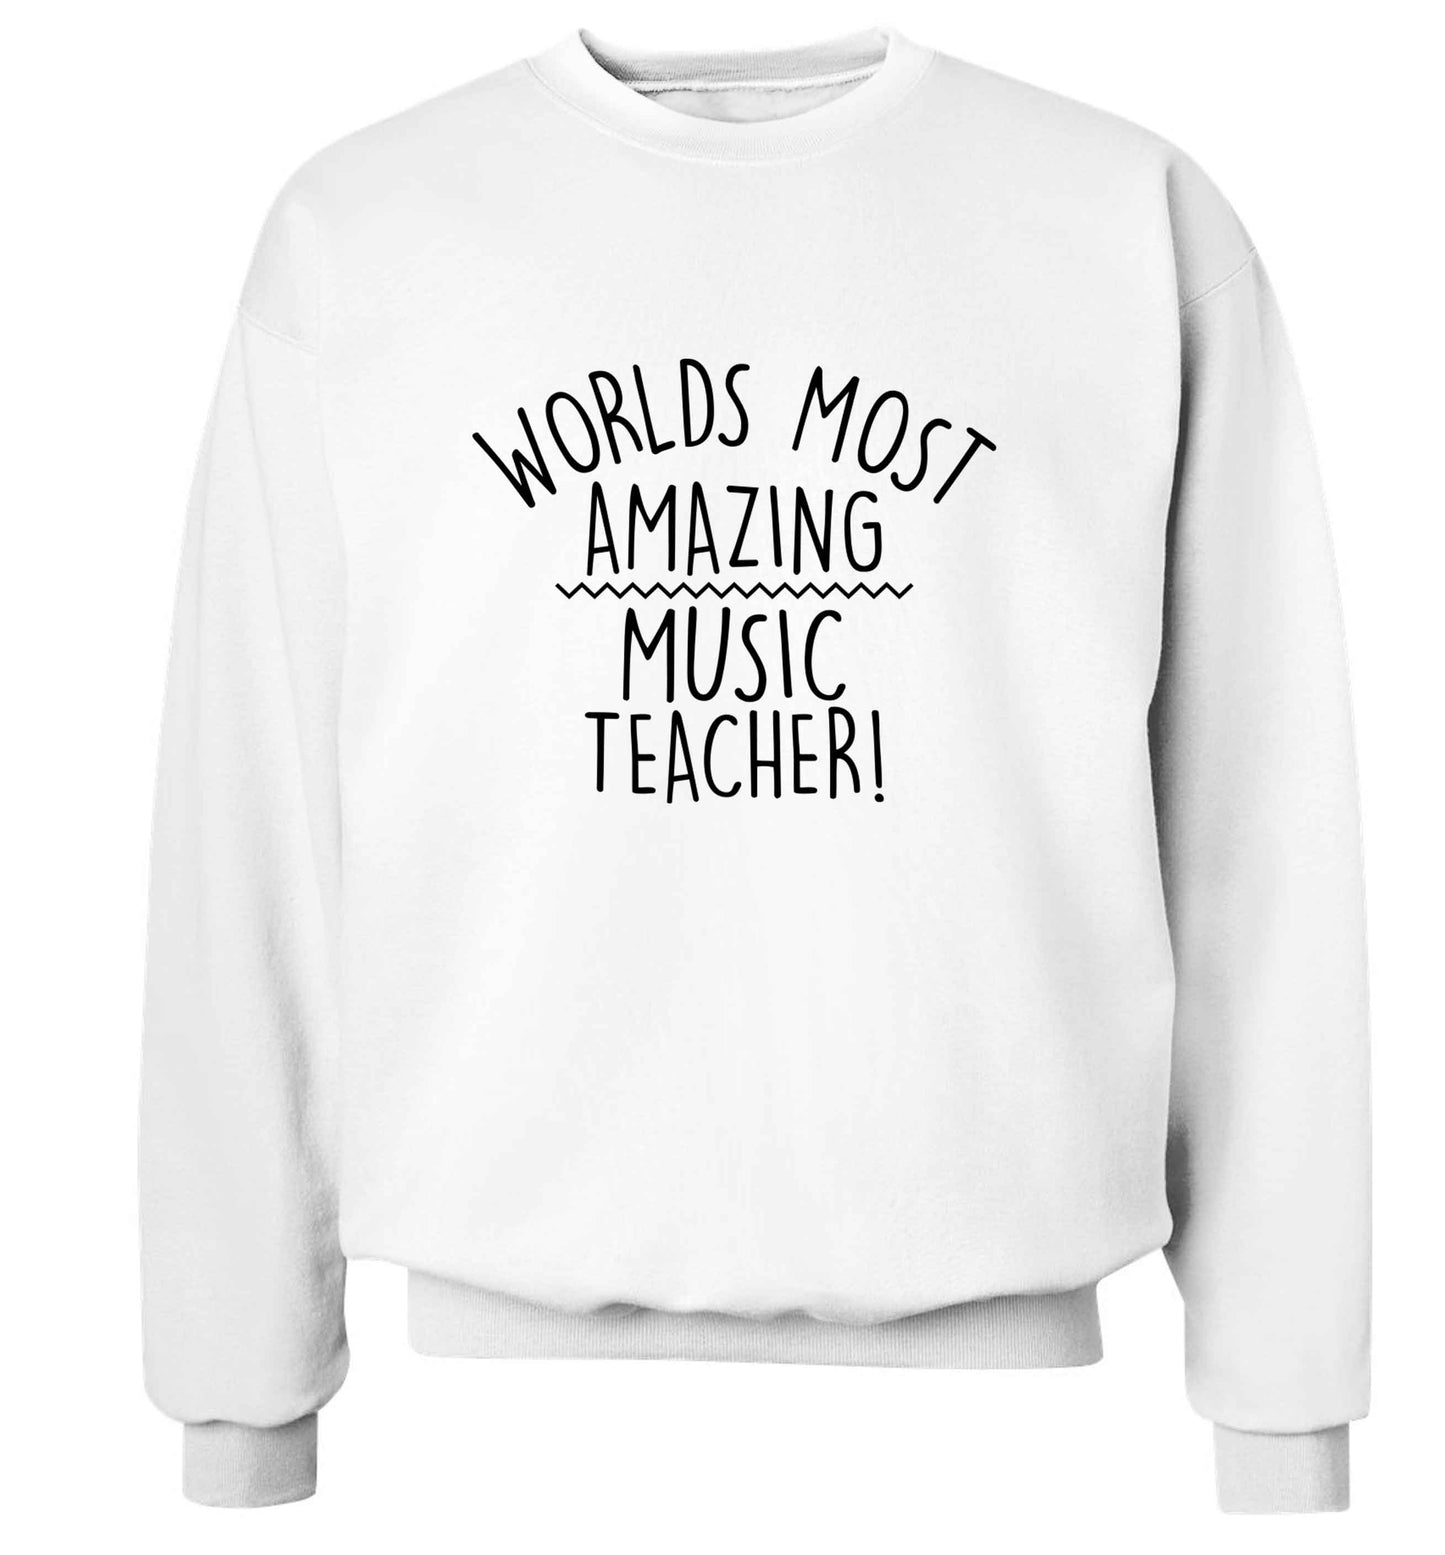 Worlds most amazing music teacher adult's unisex white sweater 2XL